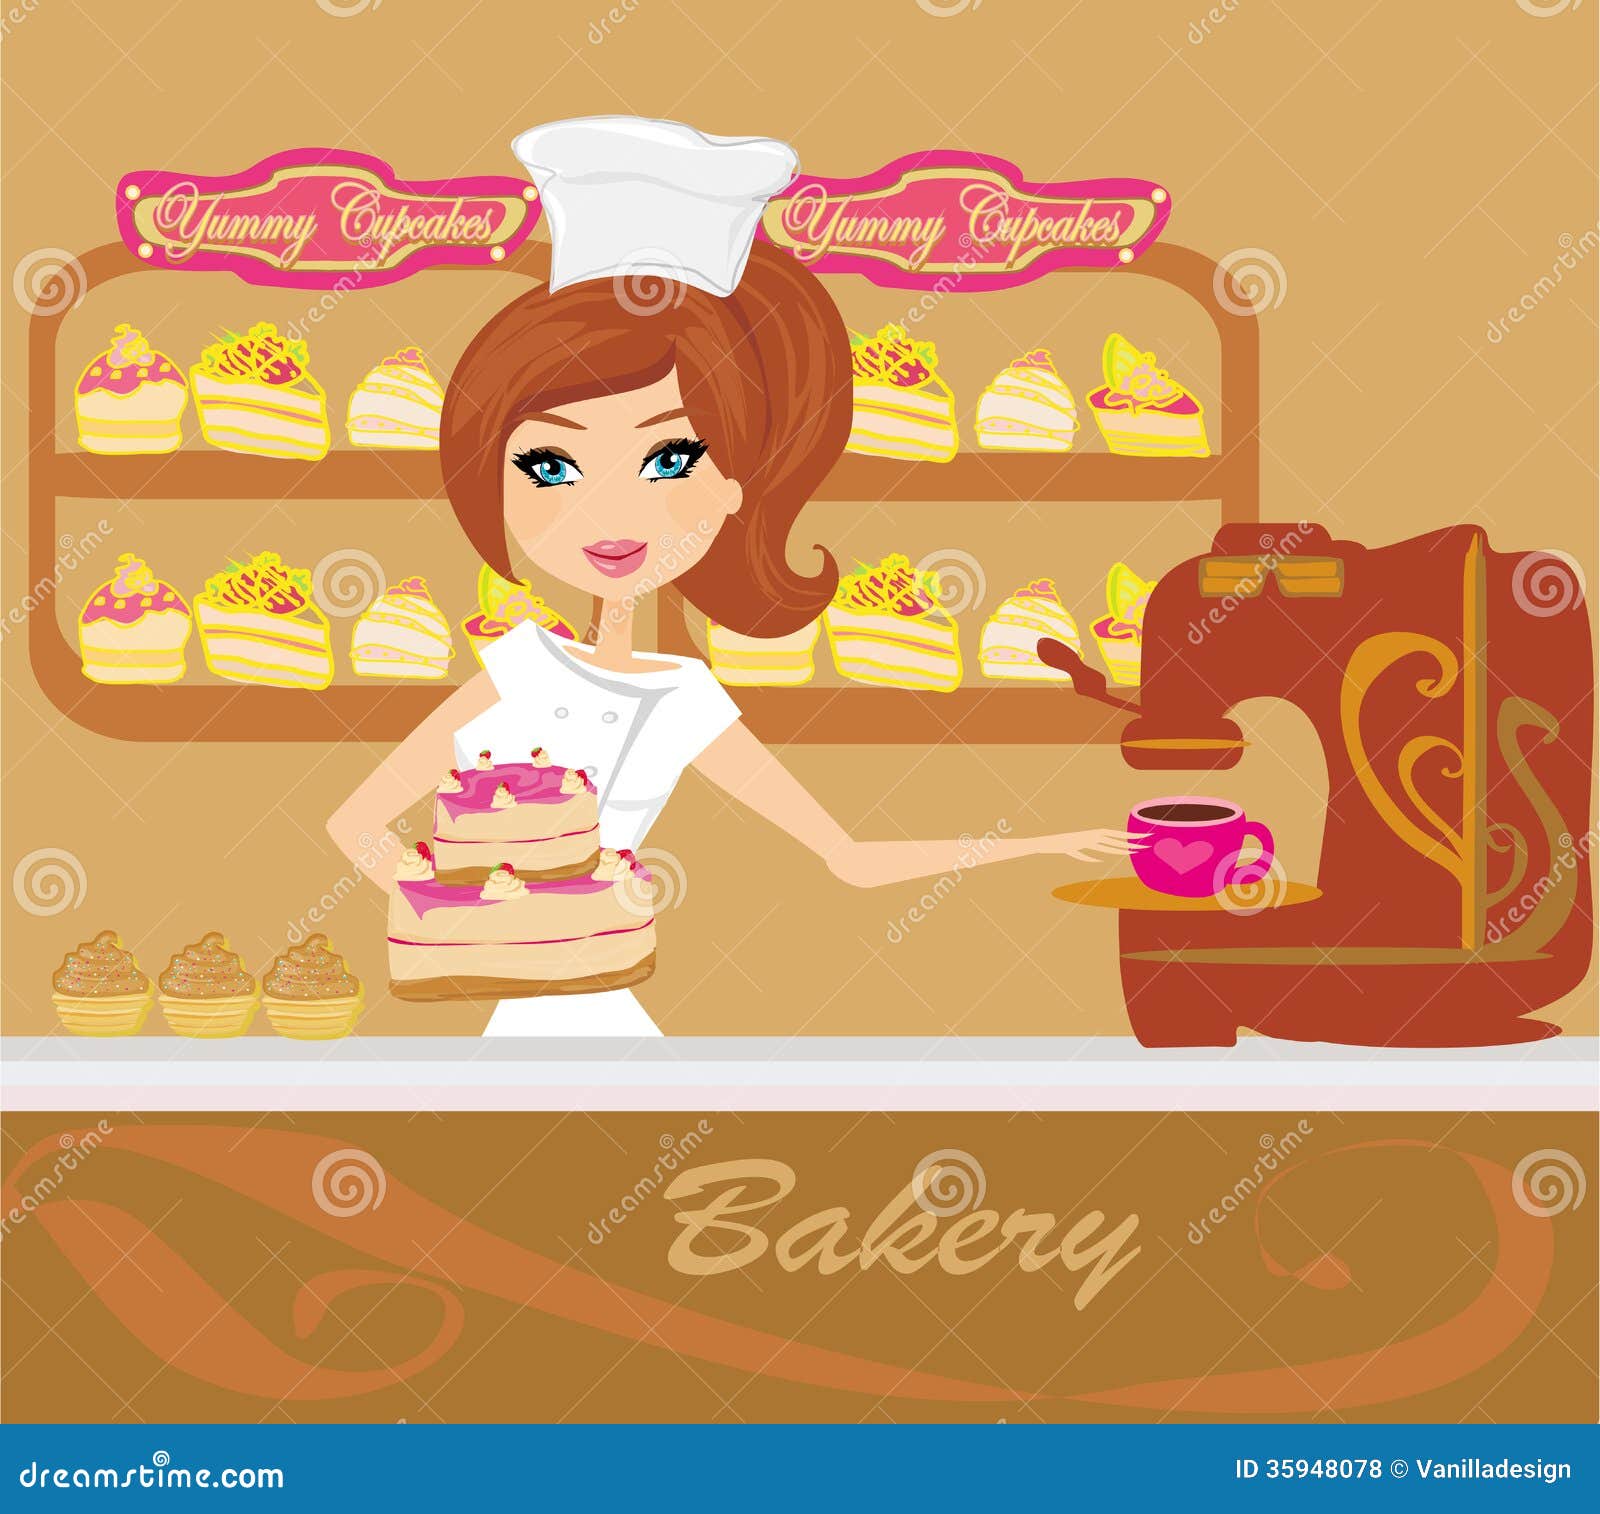 clipart bakery shop - photo #22